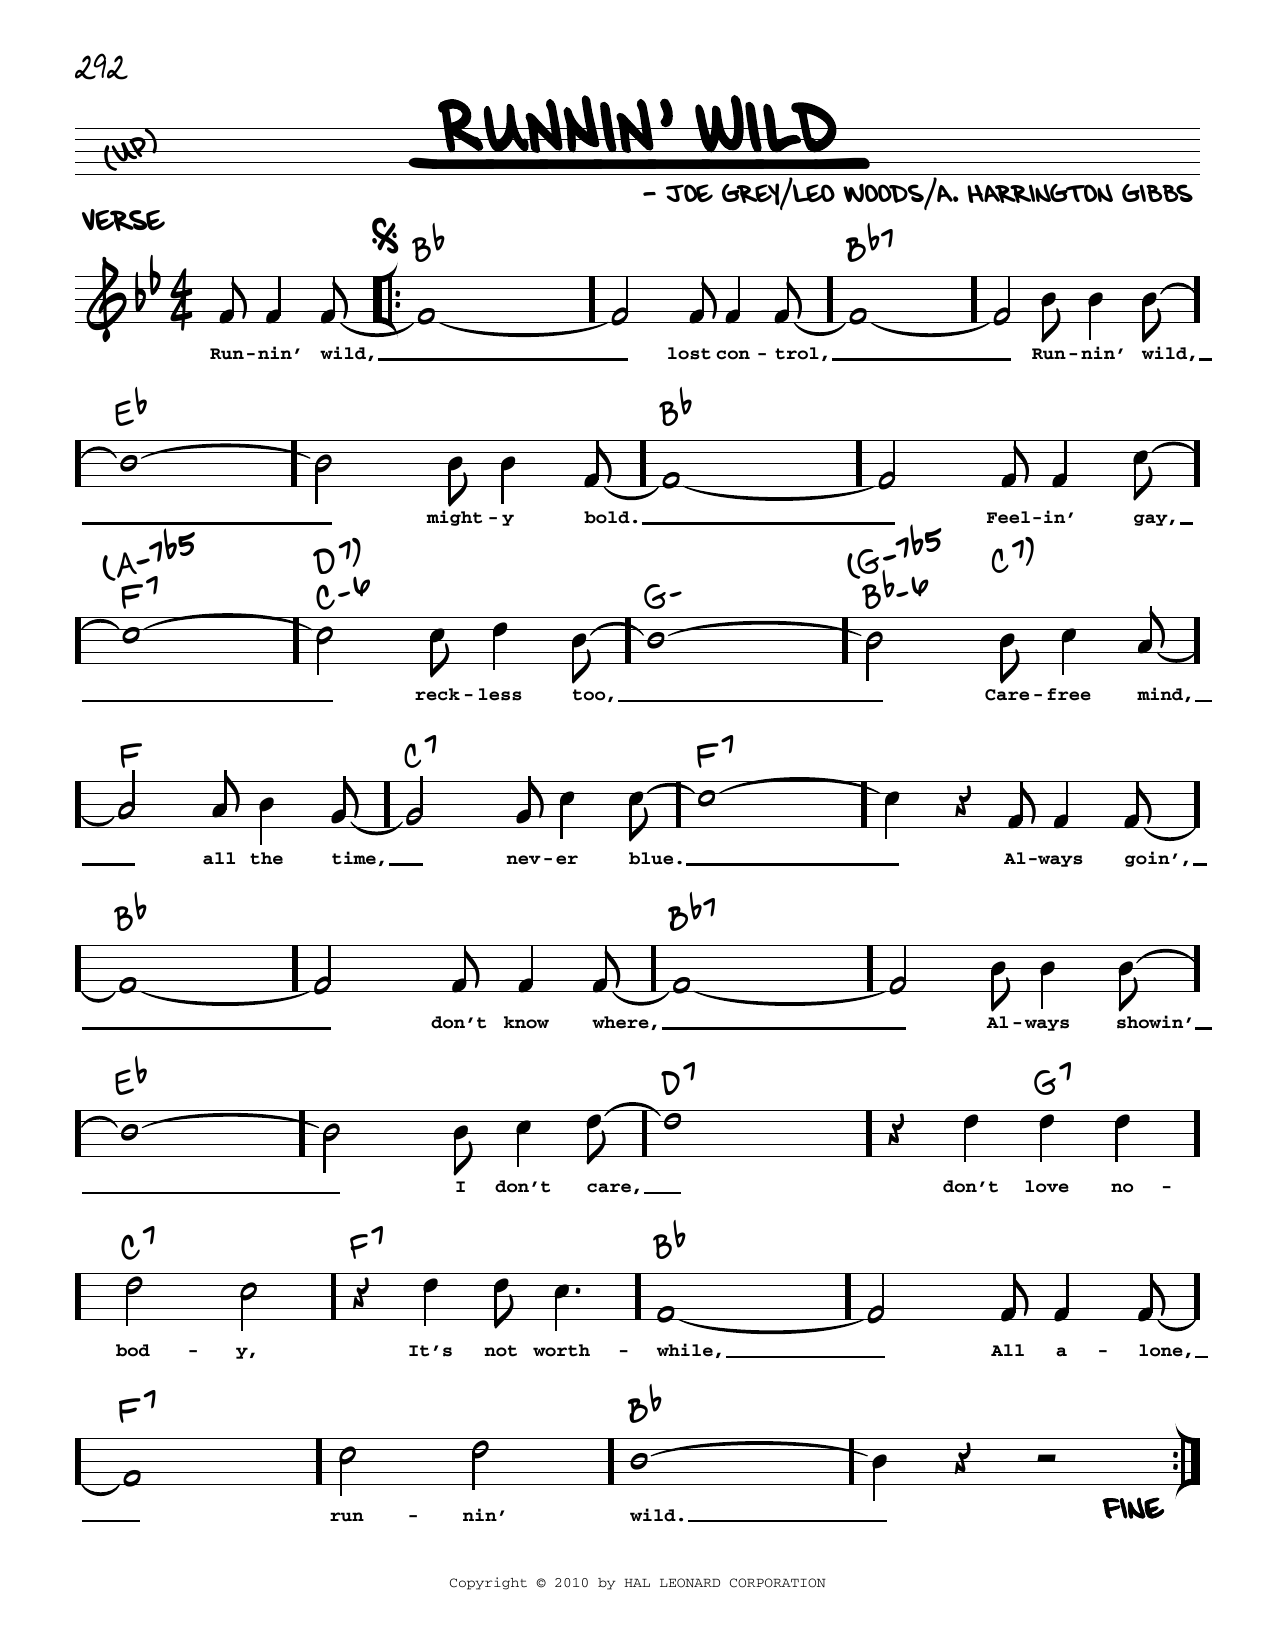 Joe Grey Runnin' Wild (arr. Robert Rawlins) Sheet Music Notes & Chords for Real Book – Melody, Lyrics & Chords - Download or Print PDF